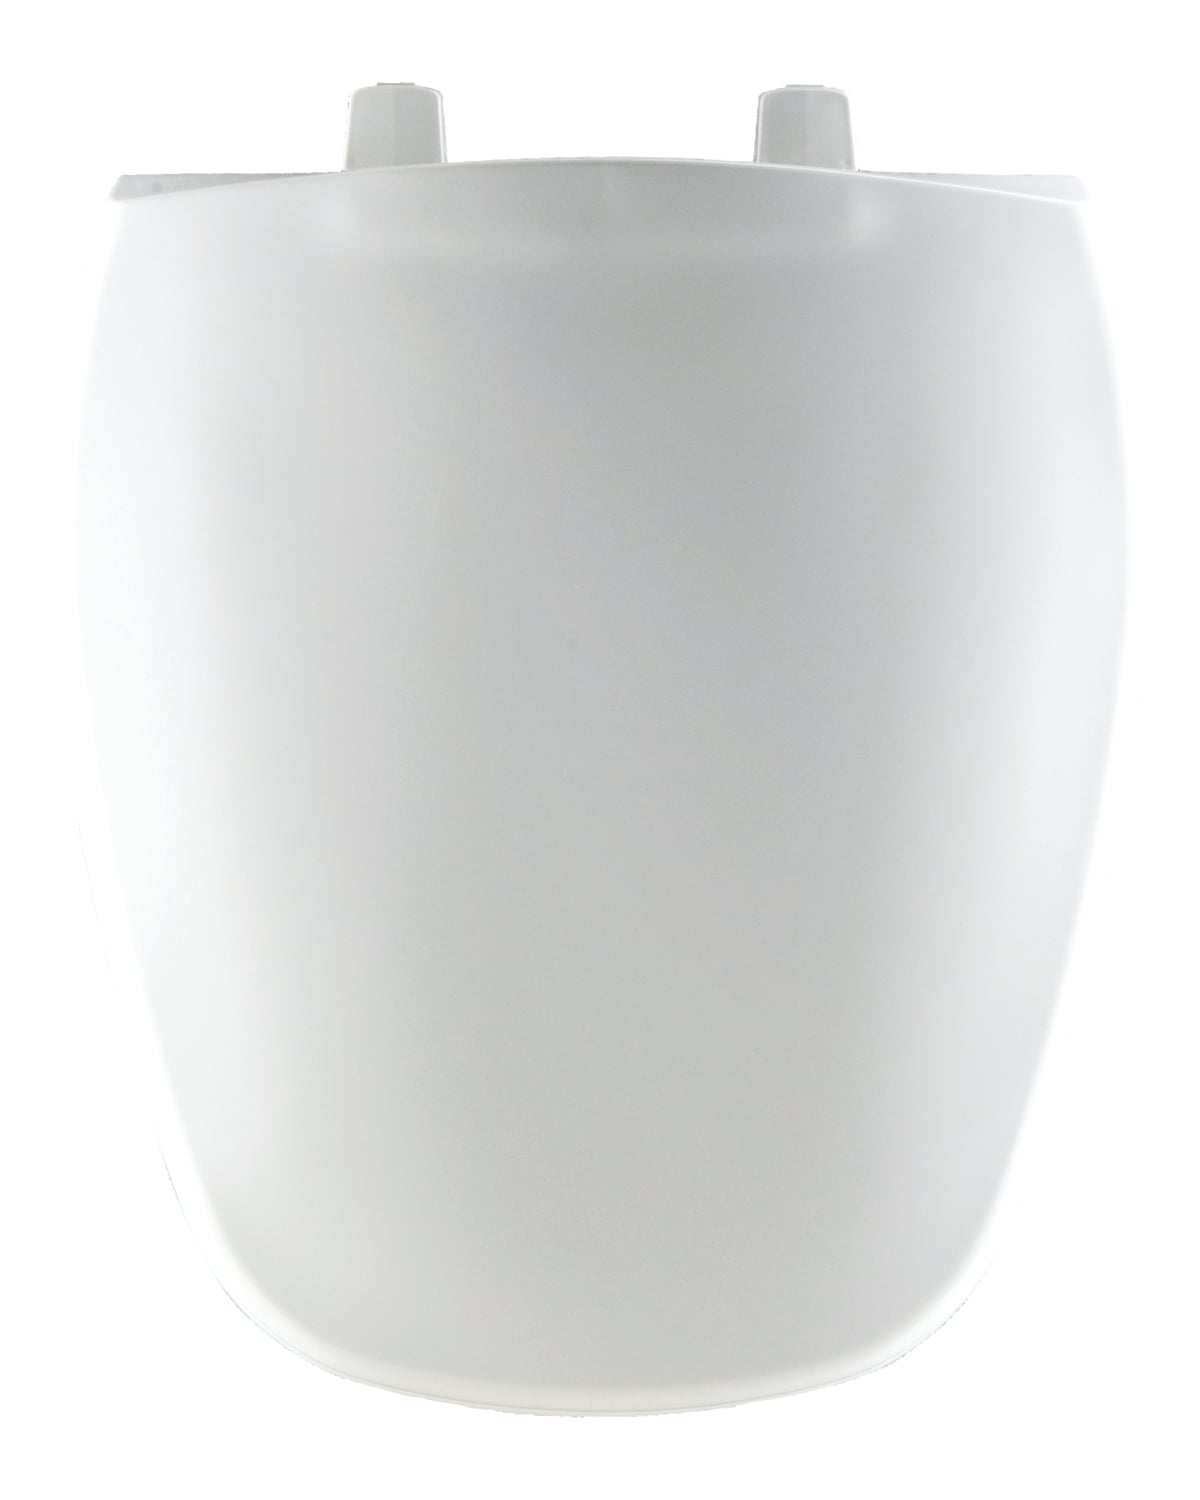 Bemis 1240200162 Eljer Emblem Plastic Round Toilet Seat Silver 